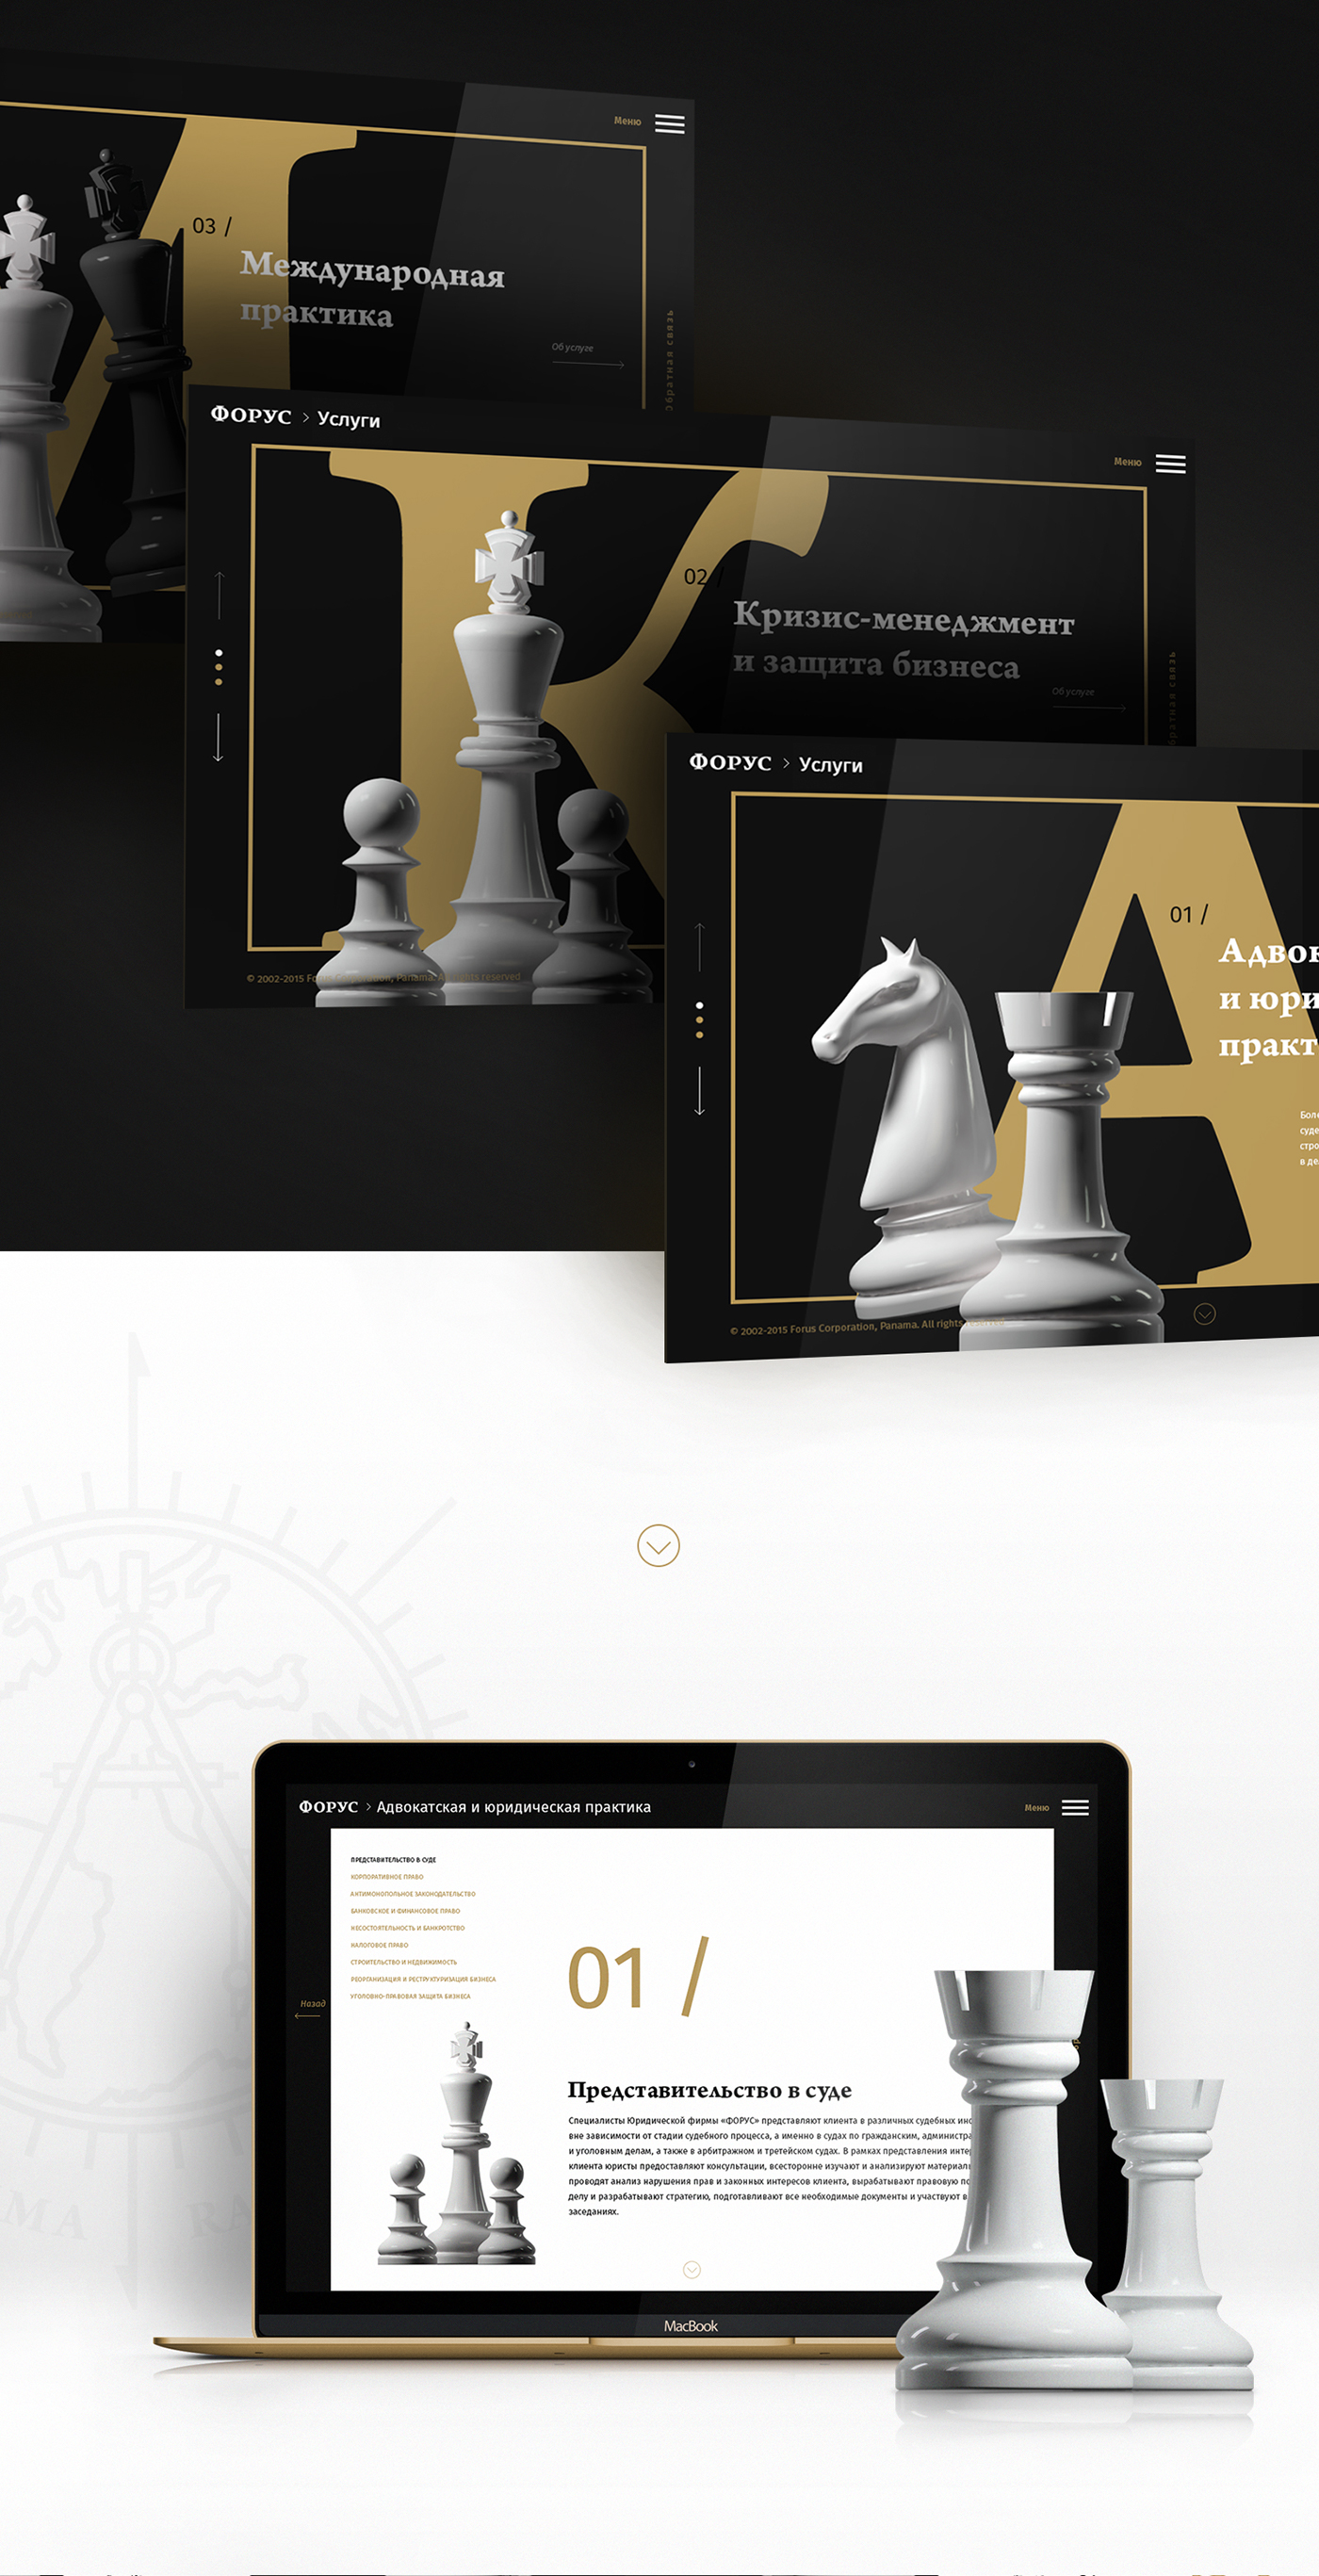 judical luxury gold chess